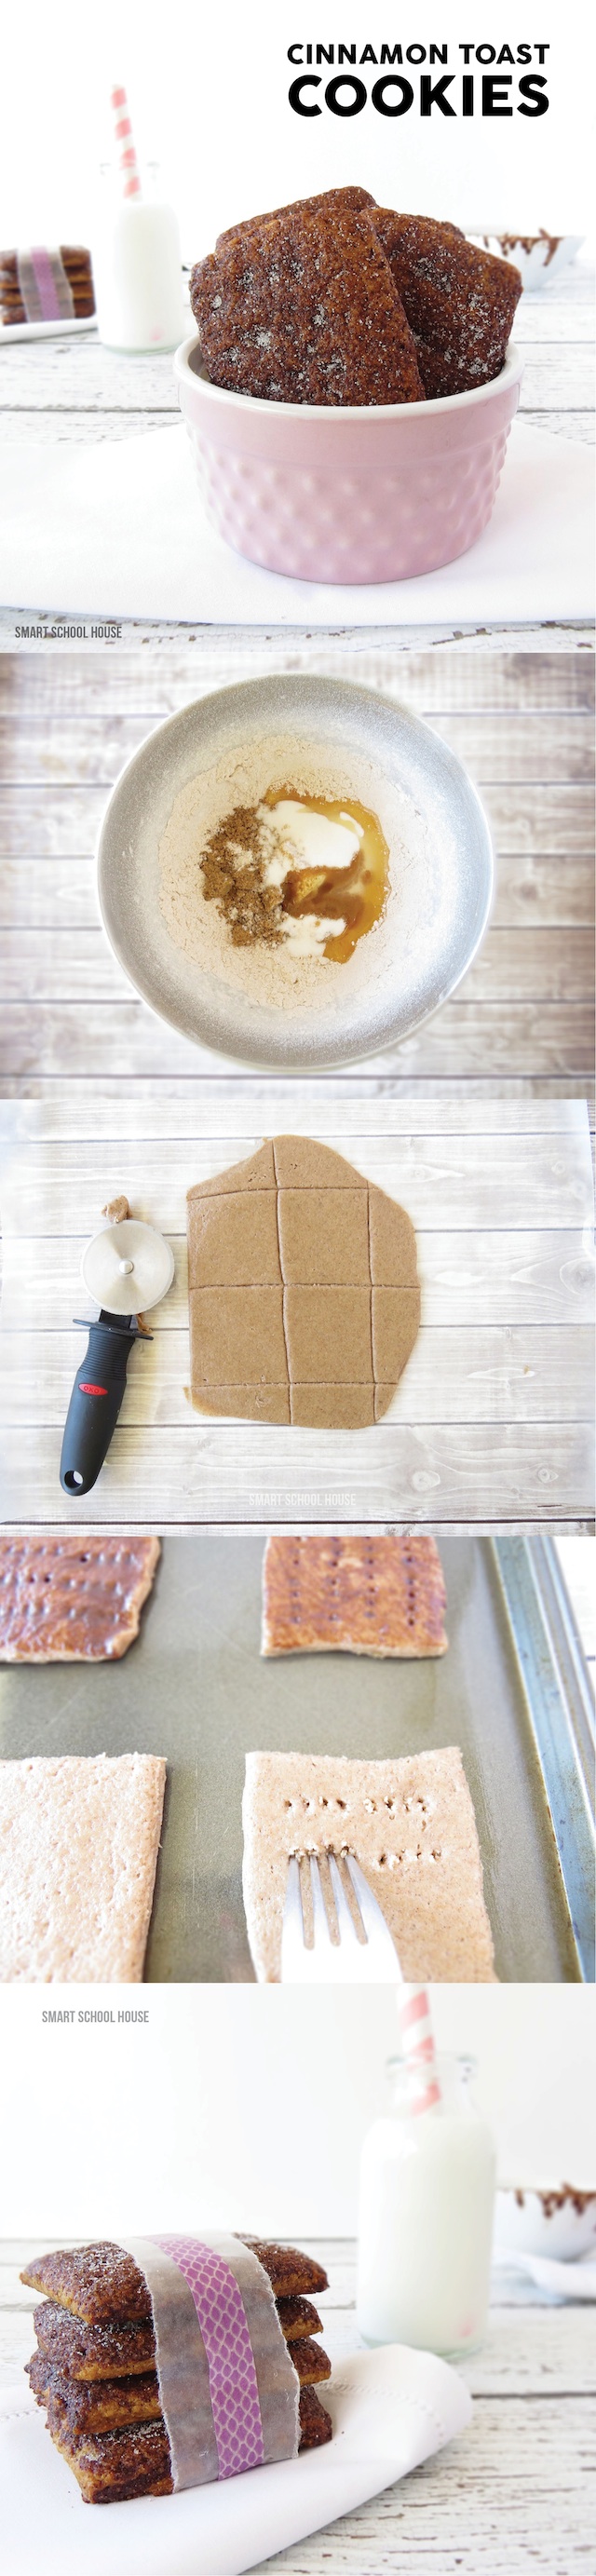 Easy recipe for Cinnamon Toast Cookies